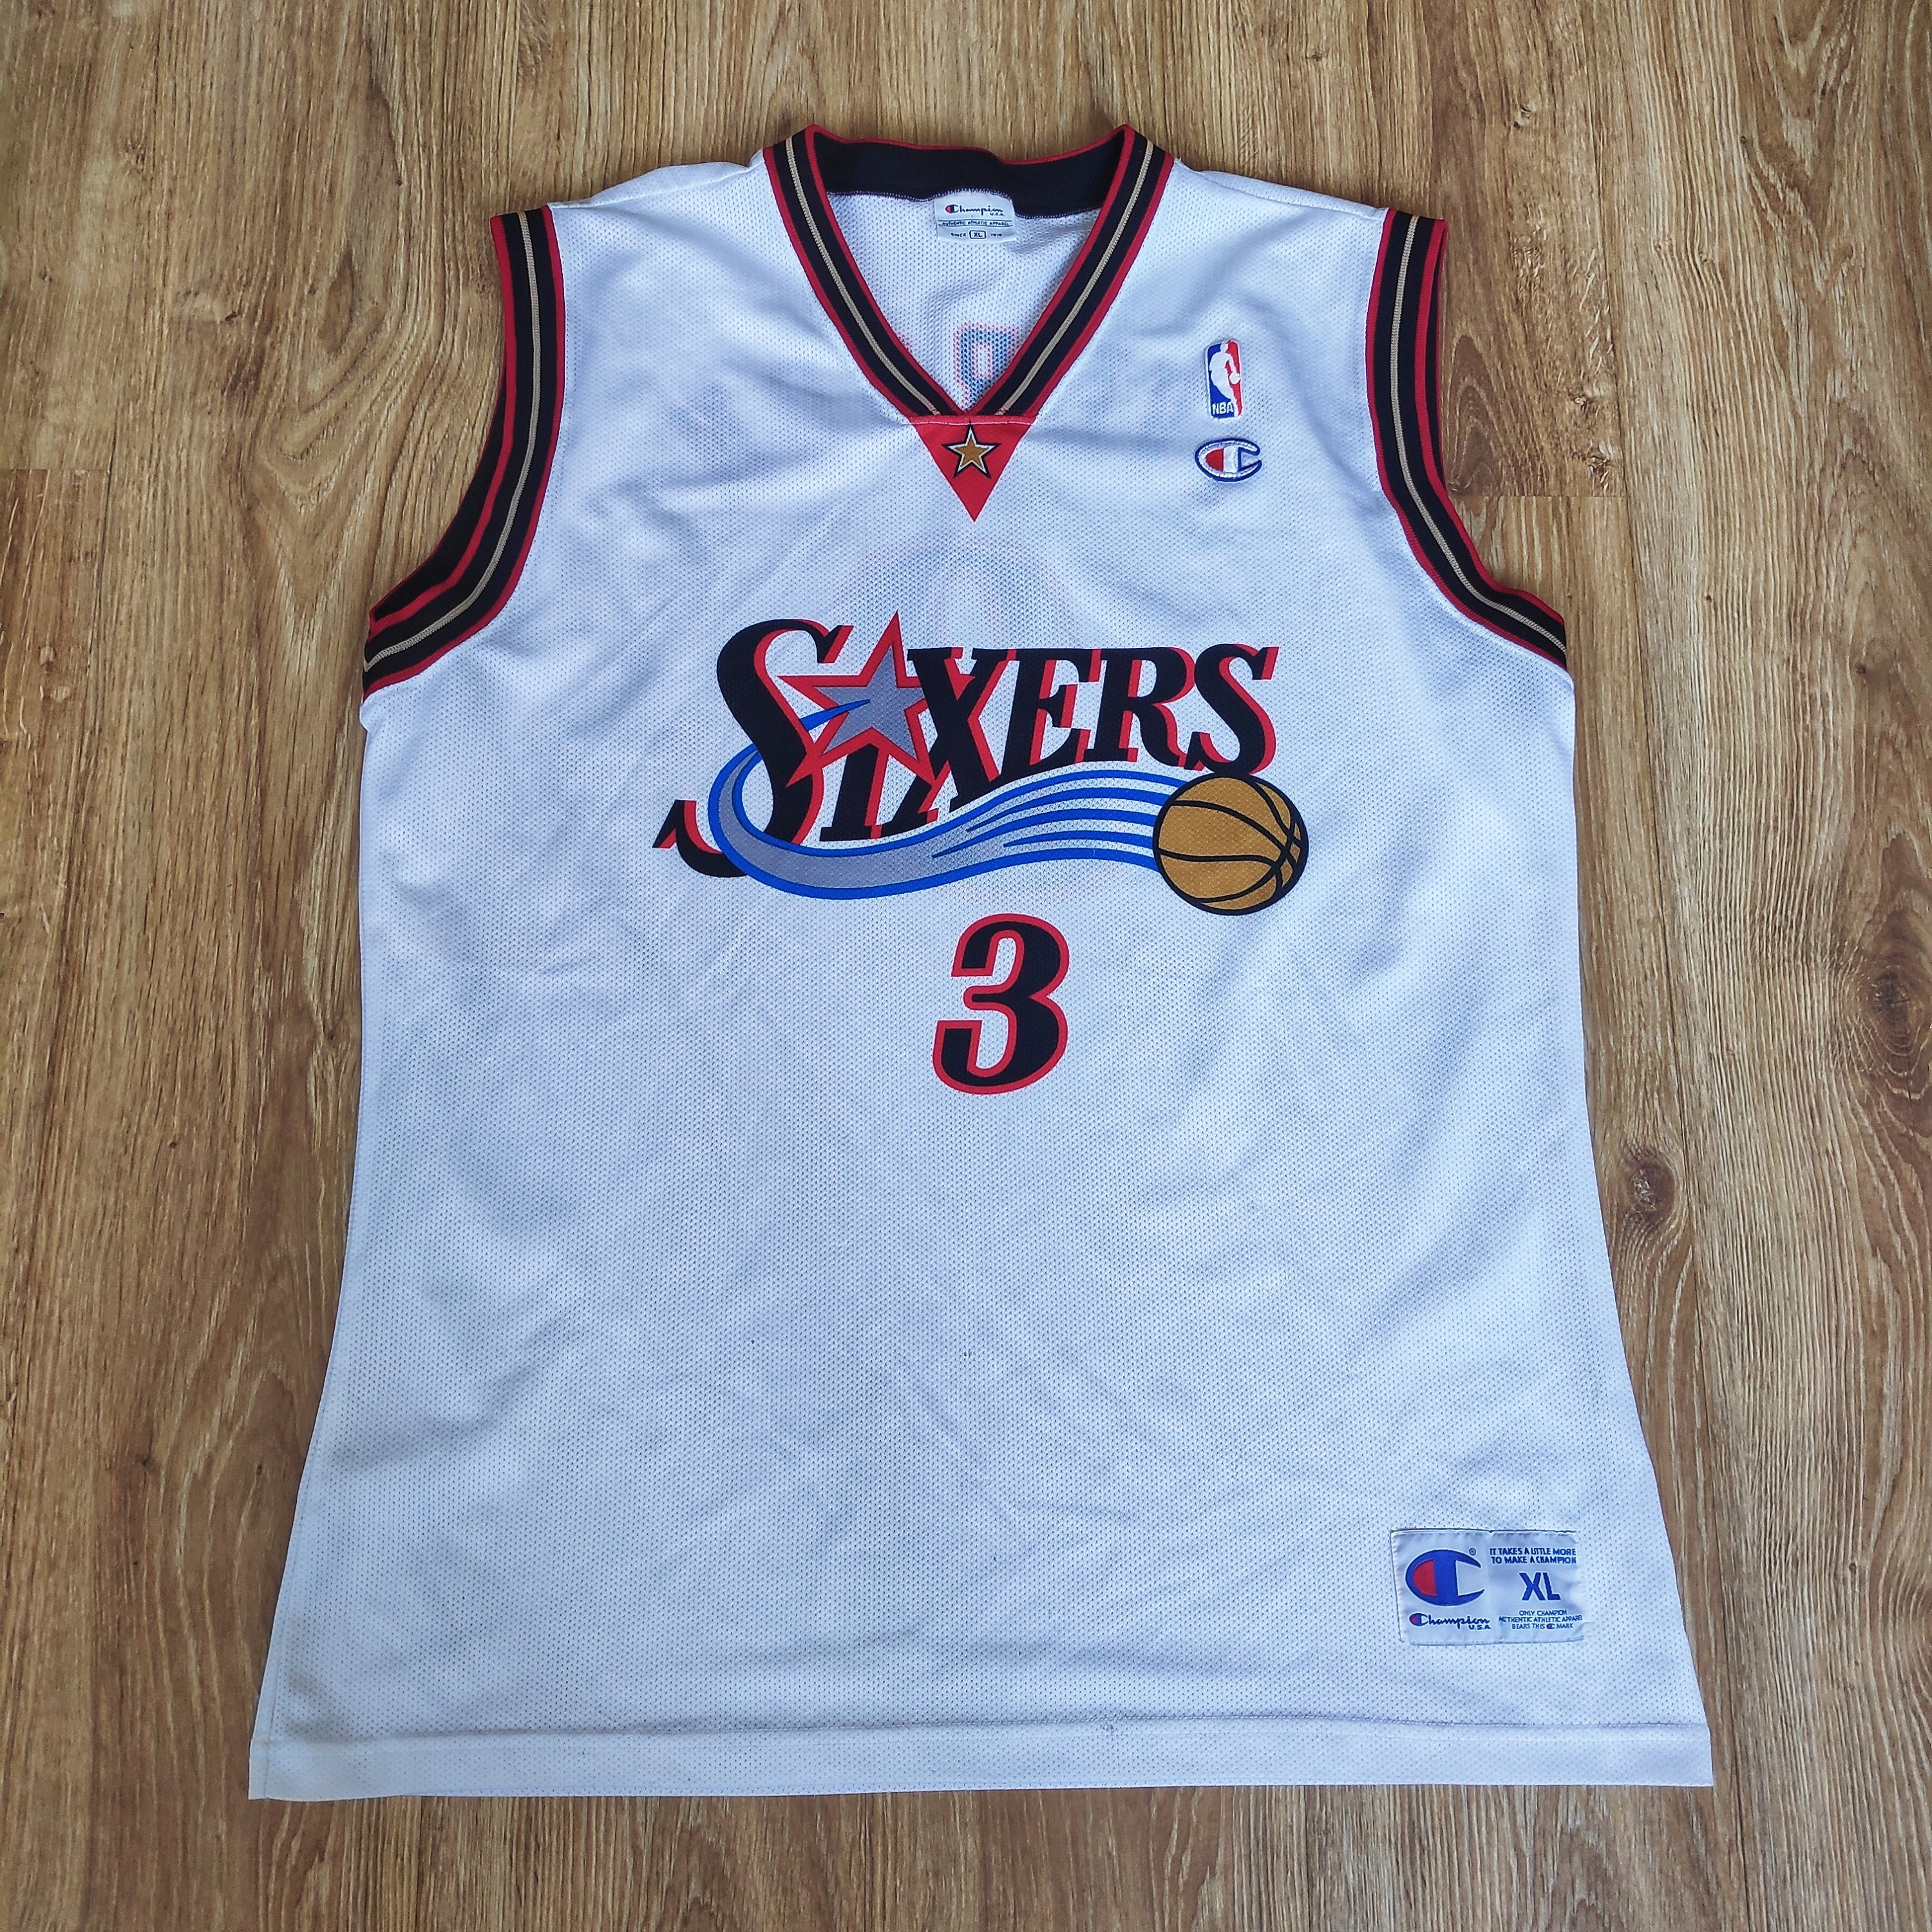 Vtg Reebok NBA Memphis Grizzlies Jersey Size (4XL) Shane Battier Red color